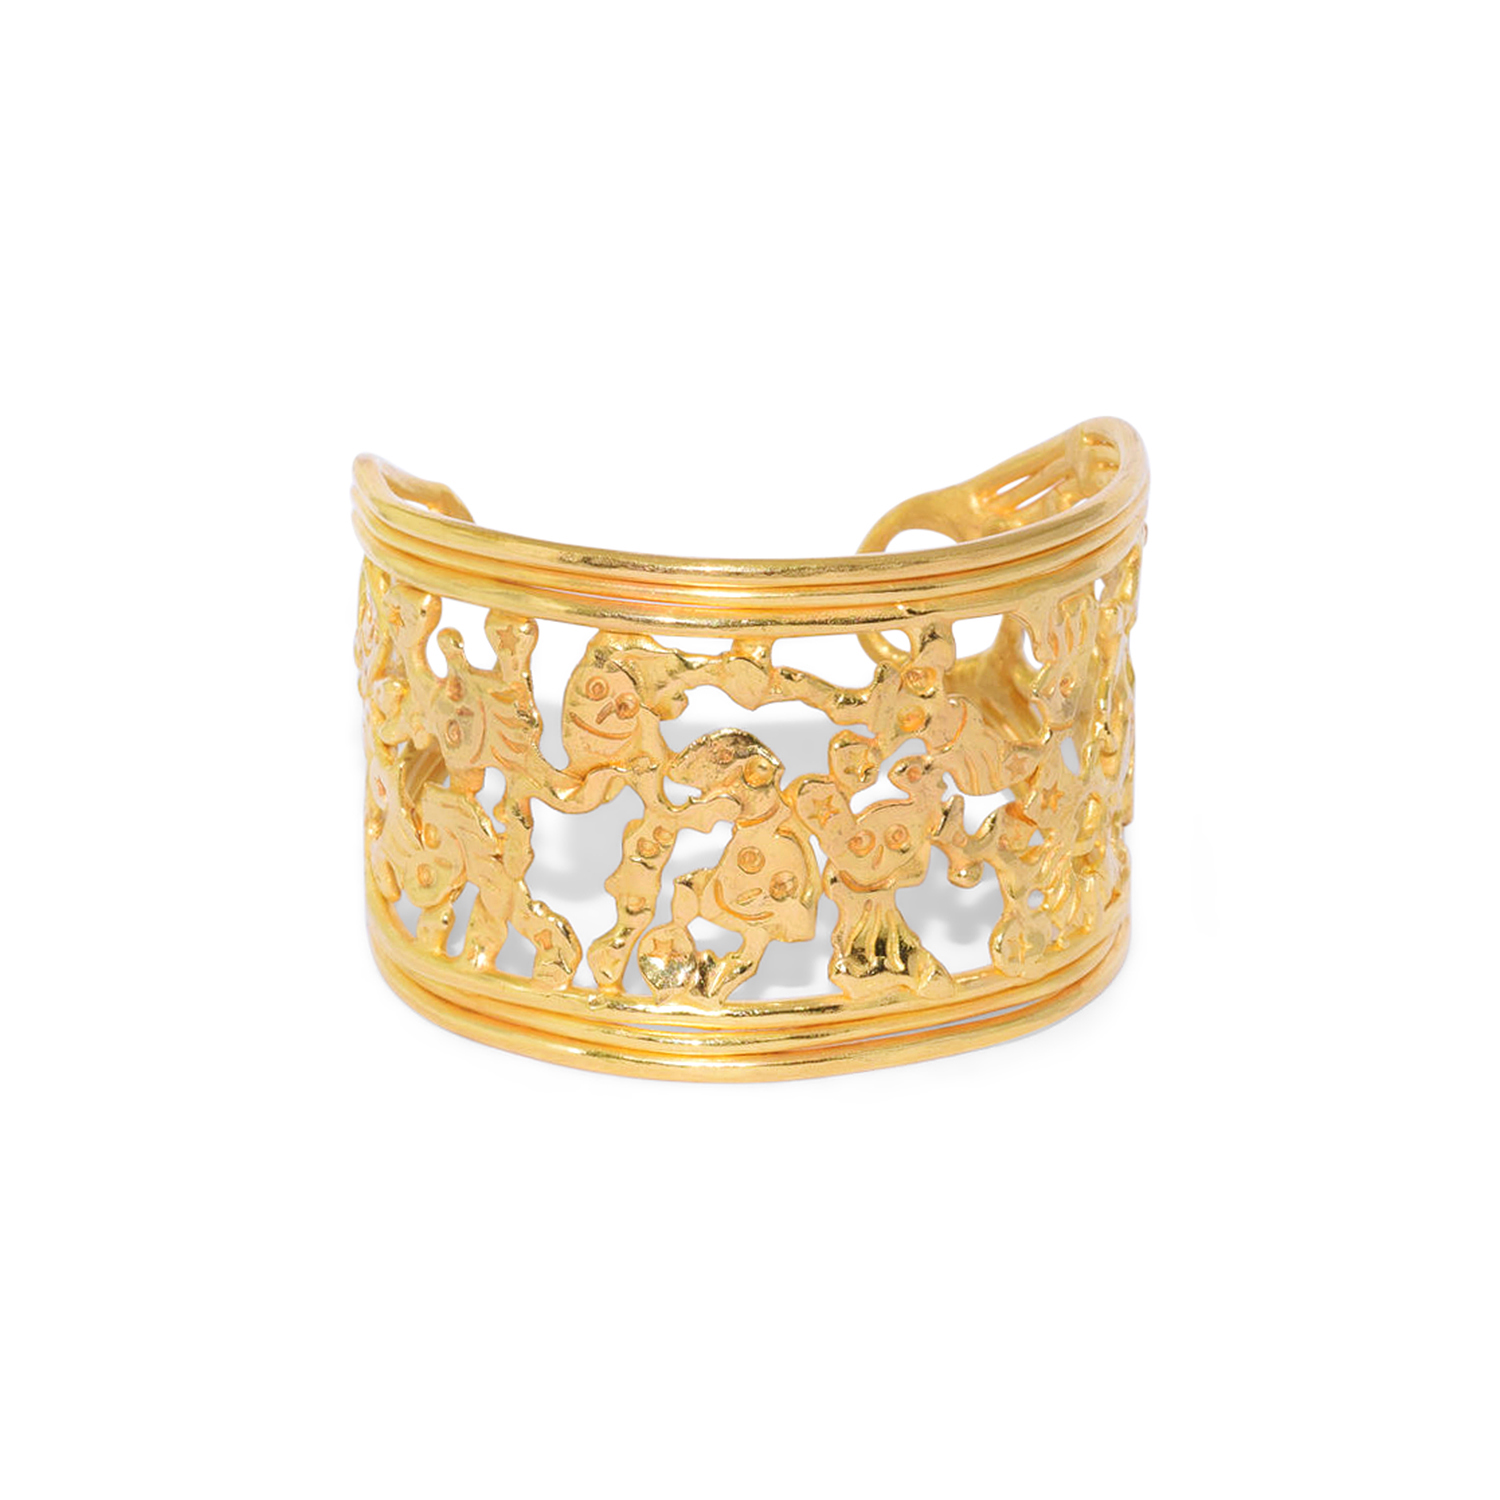 22K Yellow Gold “Treppe” Bracelet by Jean Mahie, Serial FL41836